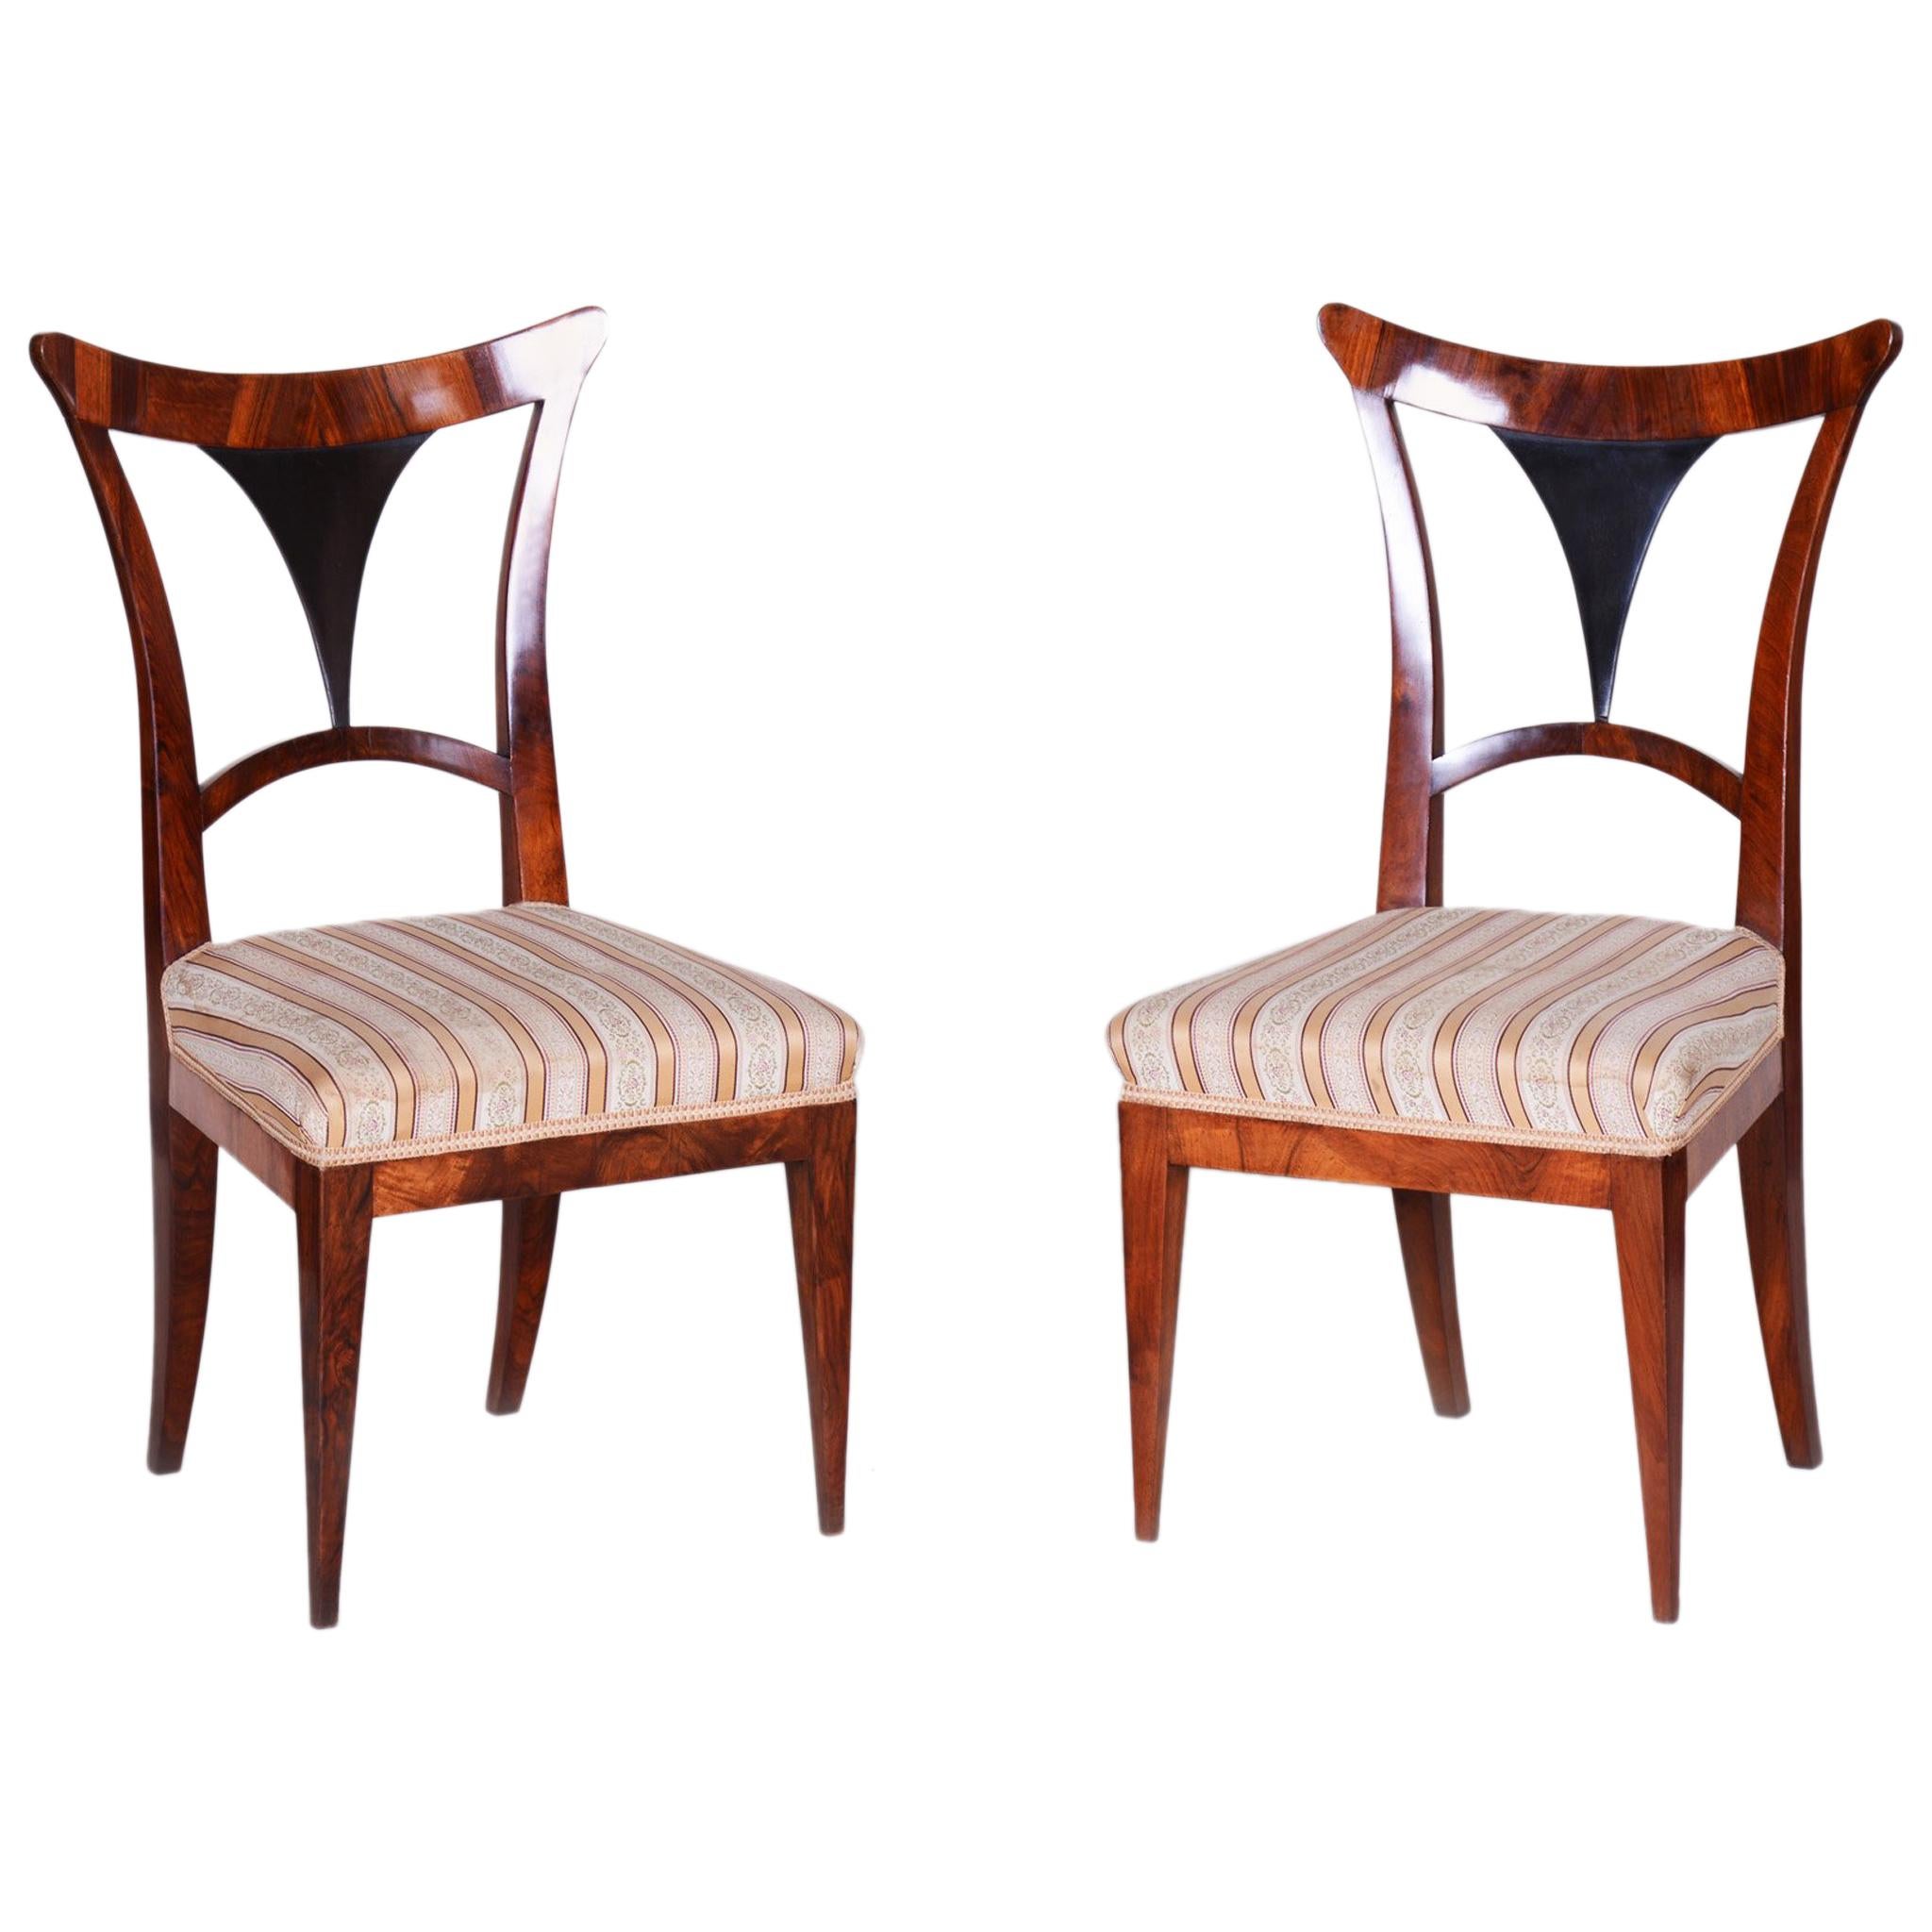 19th Century Pair of Walnut Austrian Biedermeier Chairs, Wien, Period 1810-1819 For Sale